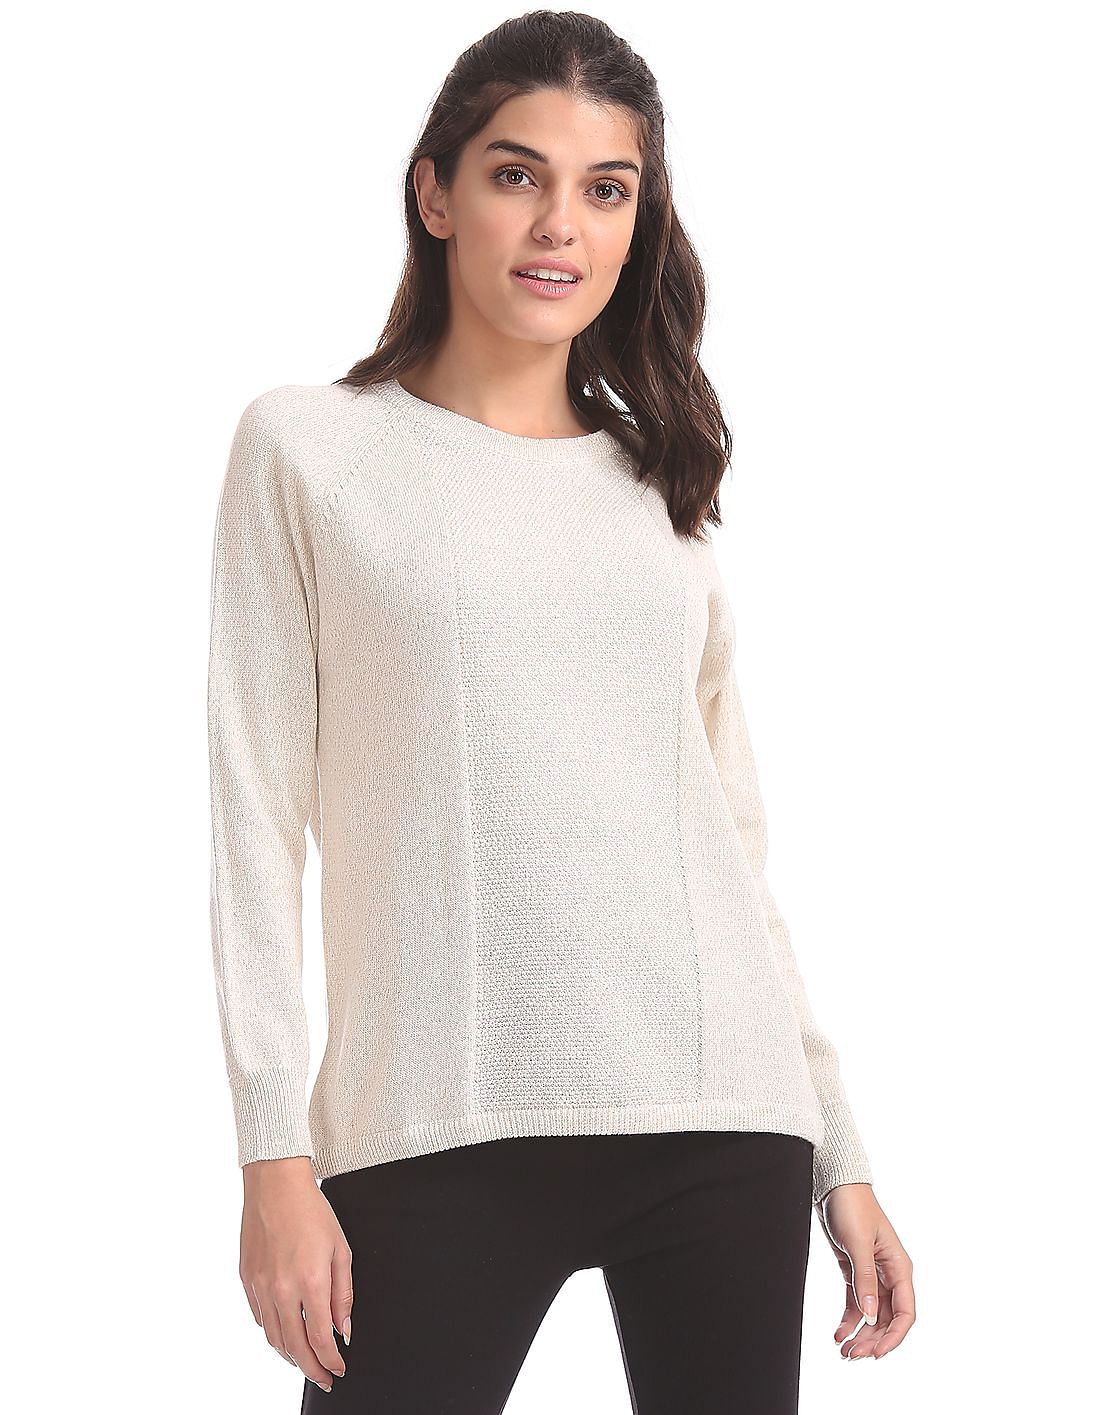 Buy Elle Studio Patterned Knit Raglan Sleeves Sweater - NNNOW.com